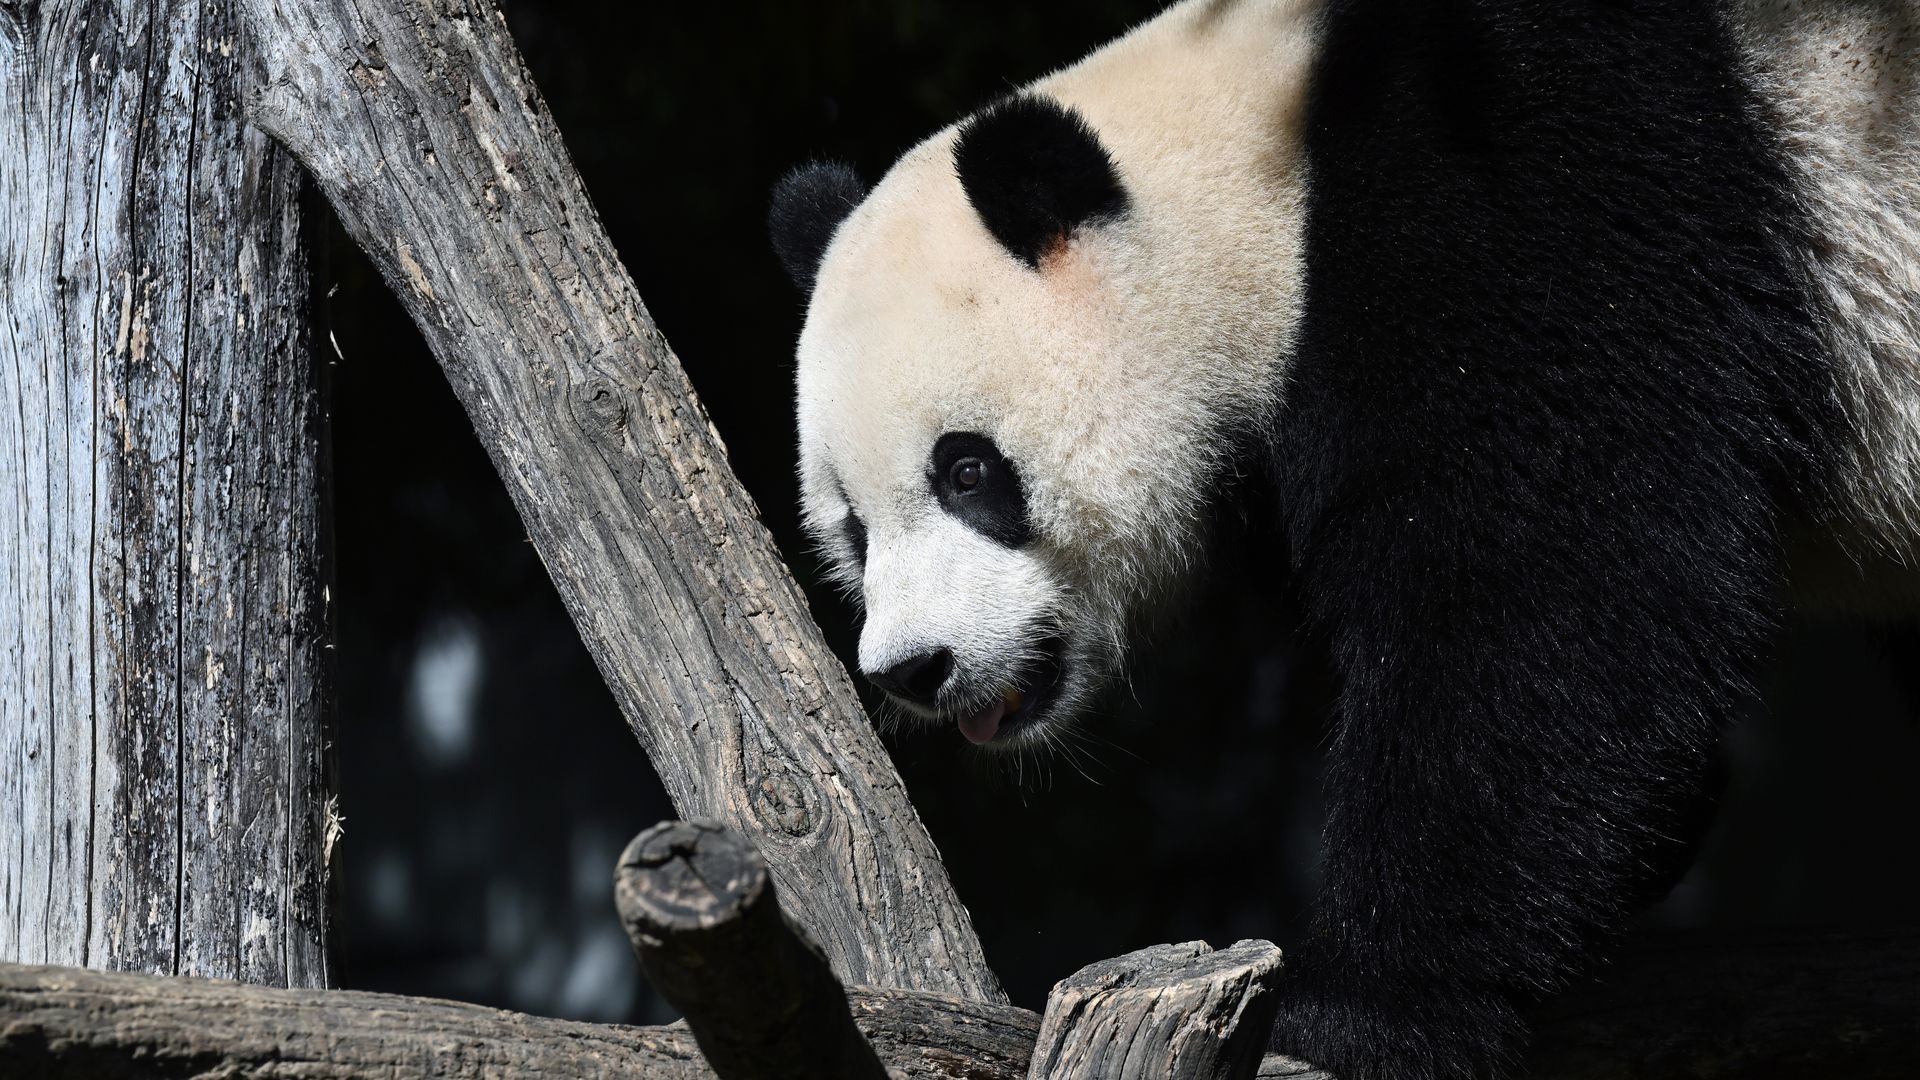 A panda sits in its enclosure at D.C.'s National Zoo.